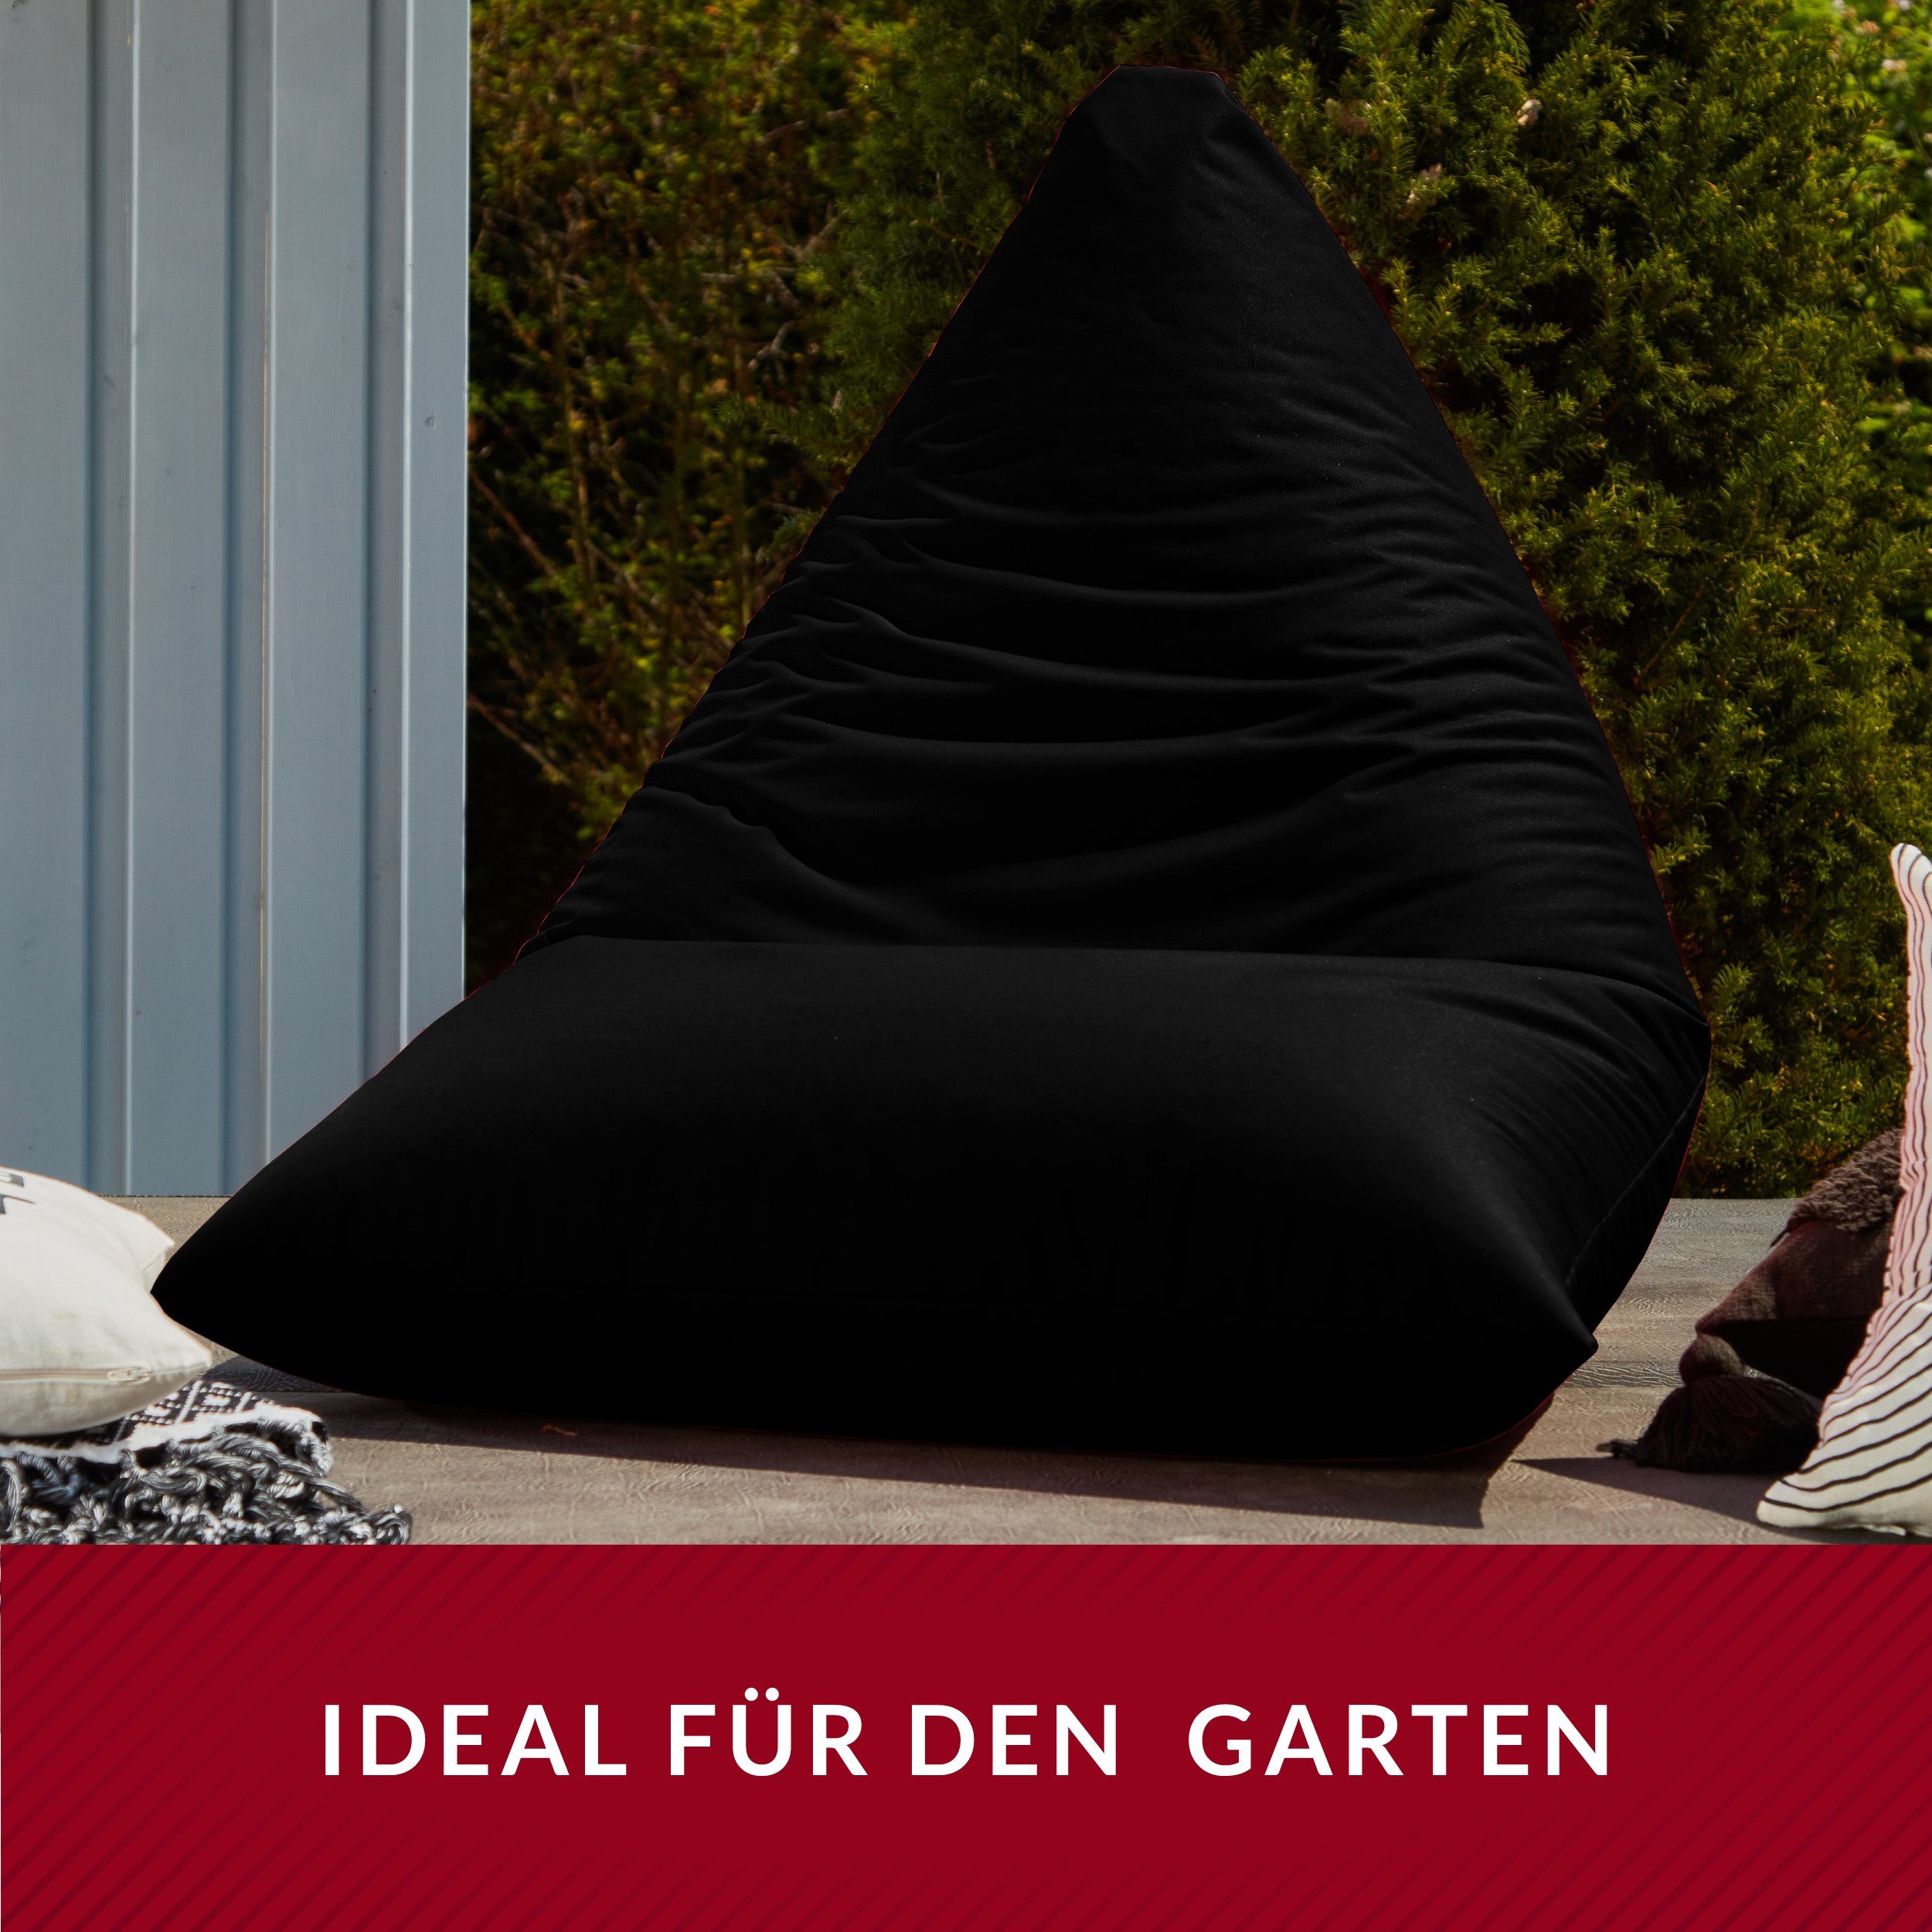 Bodenkissen Green Liegekissen Sitzkissen Sitzsack Outdoor Indoor Bag Bean & Sitzsack Bean 120x100x80cm, Schwarz